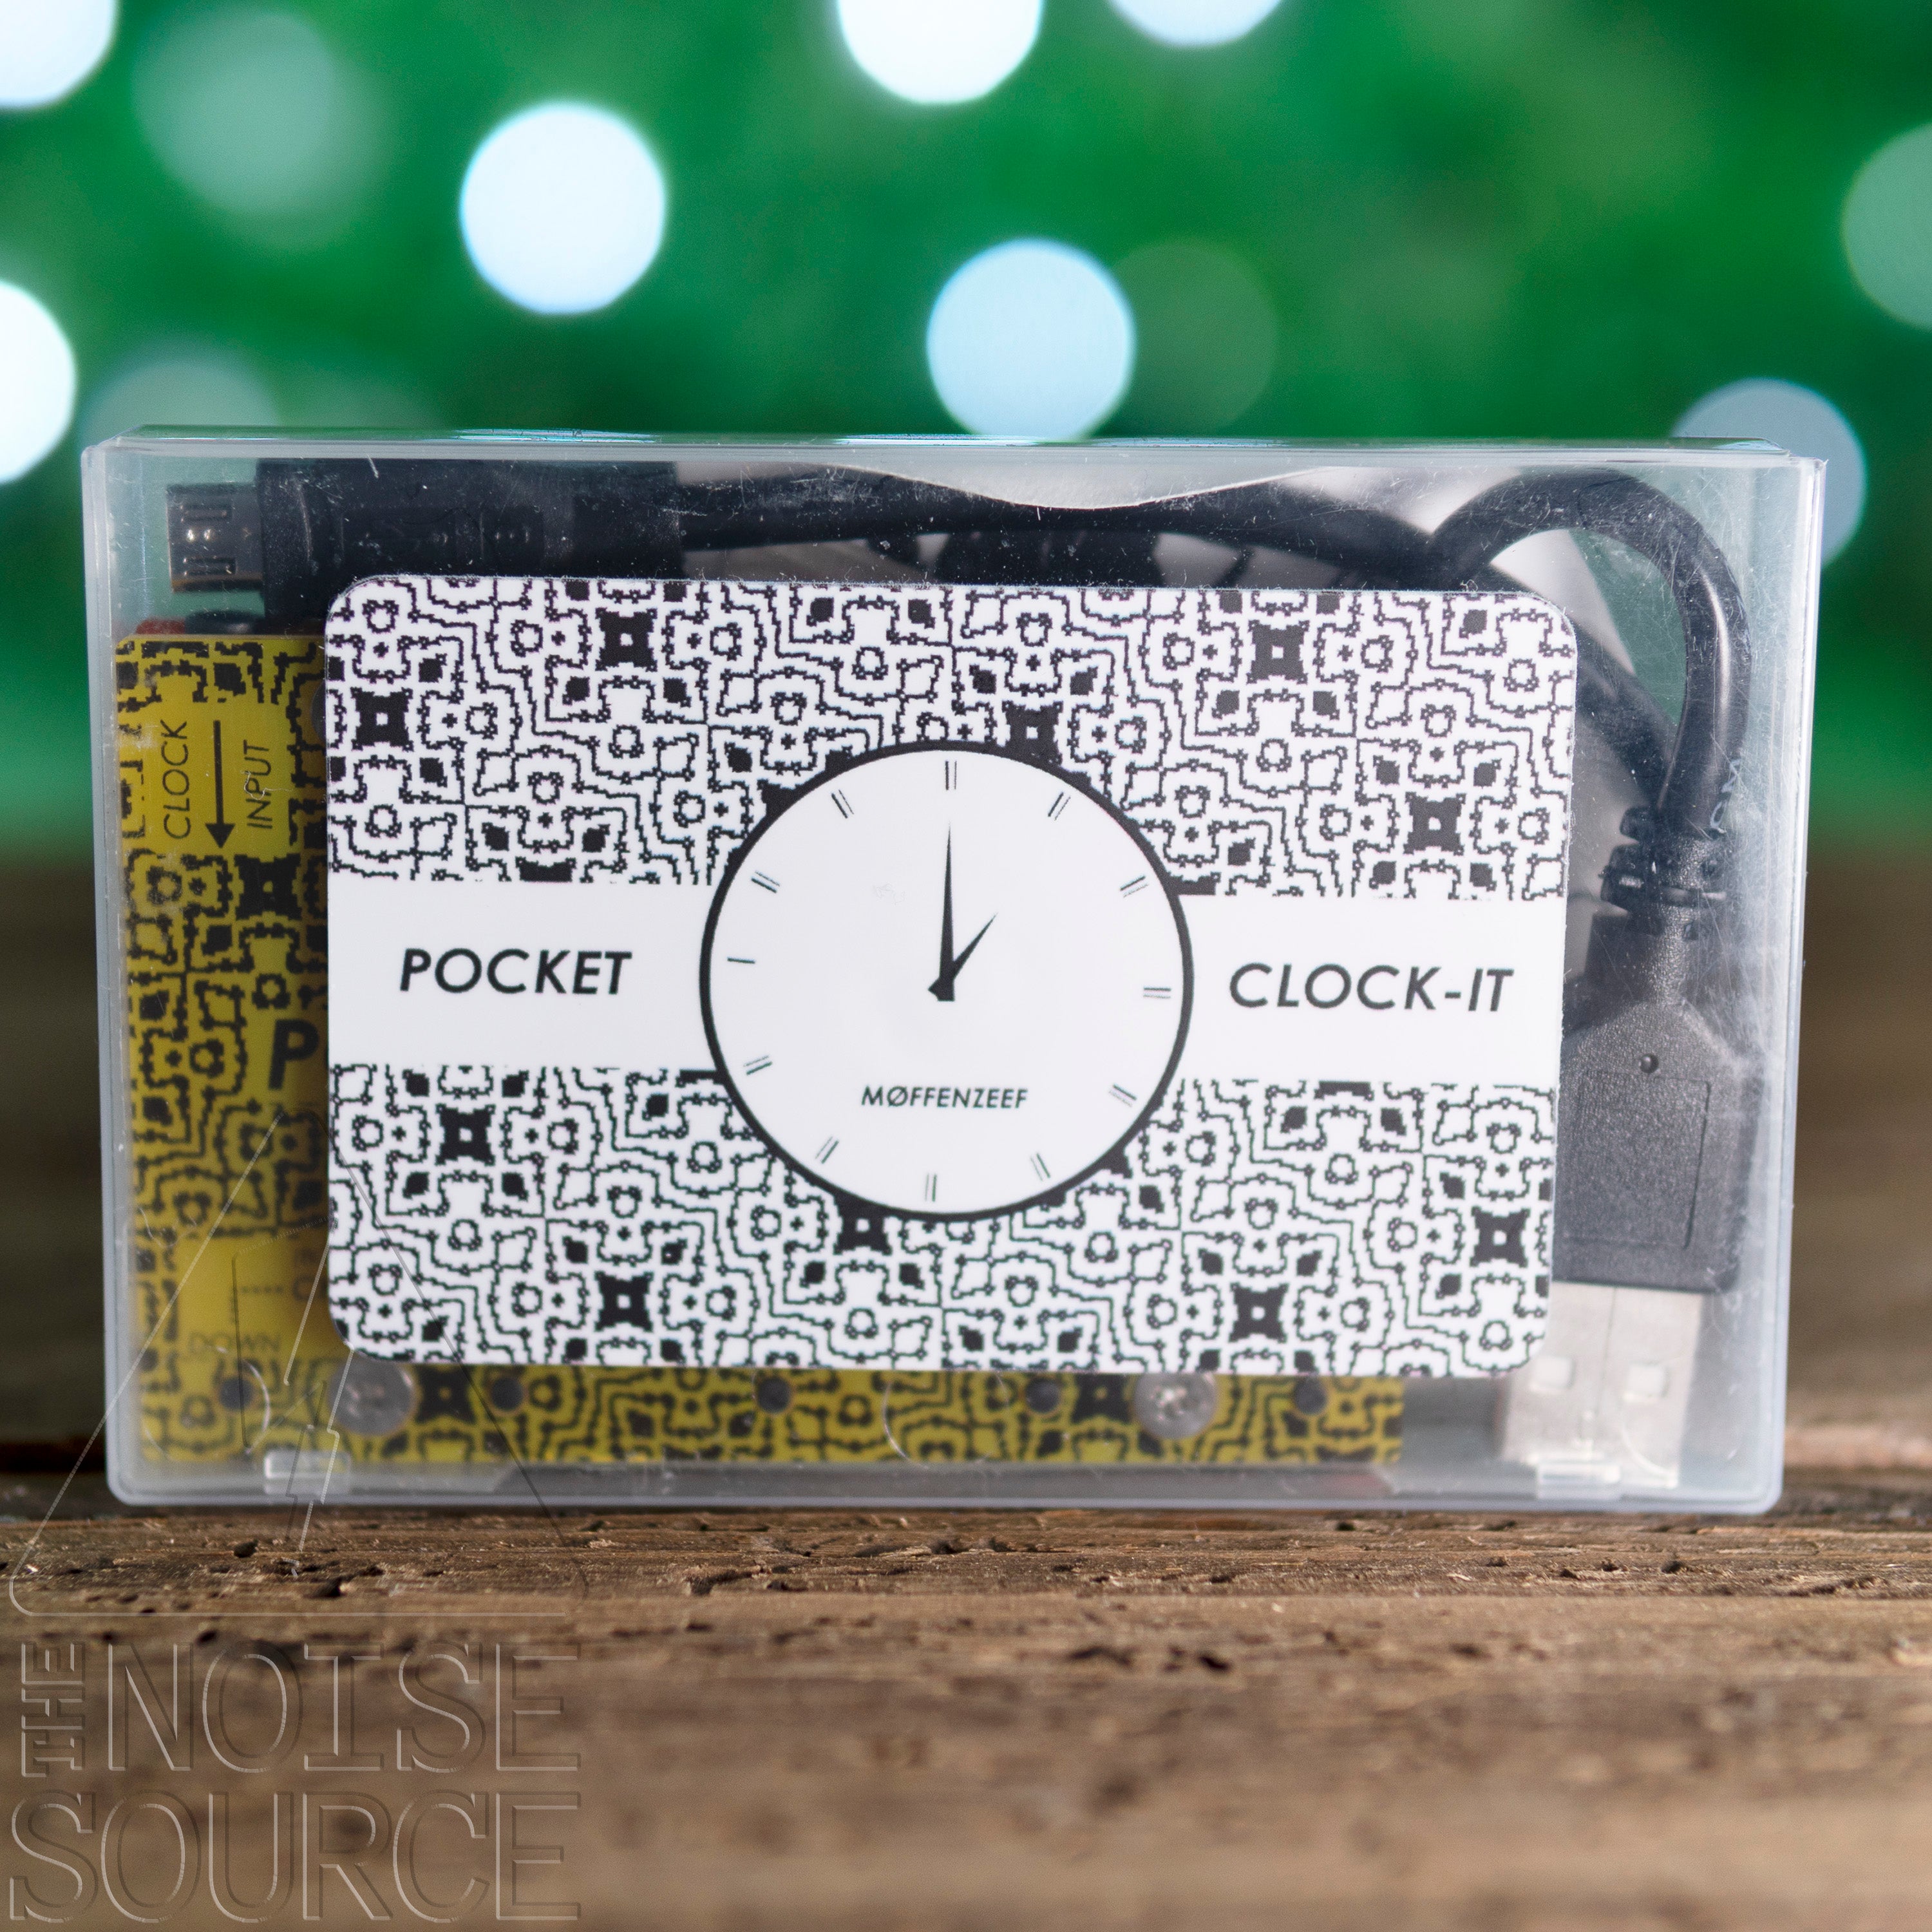 Møffenzeef Pocket Clock-It